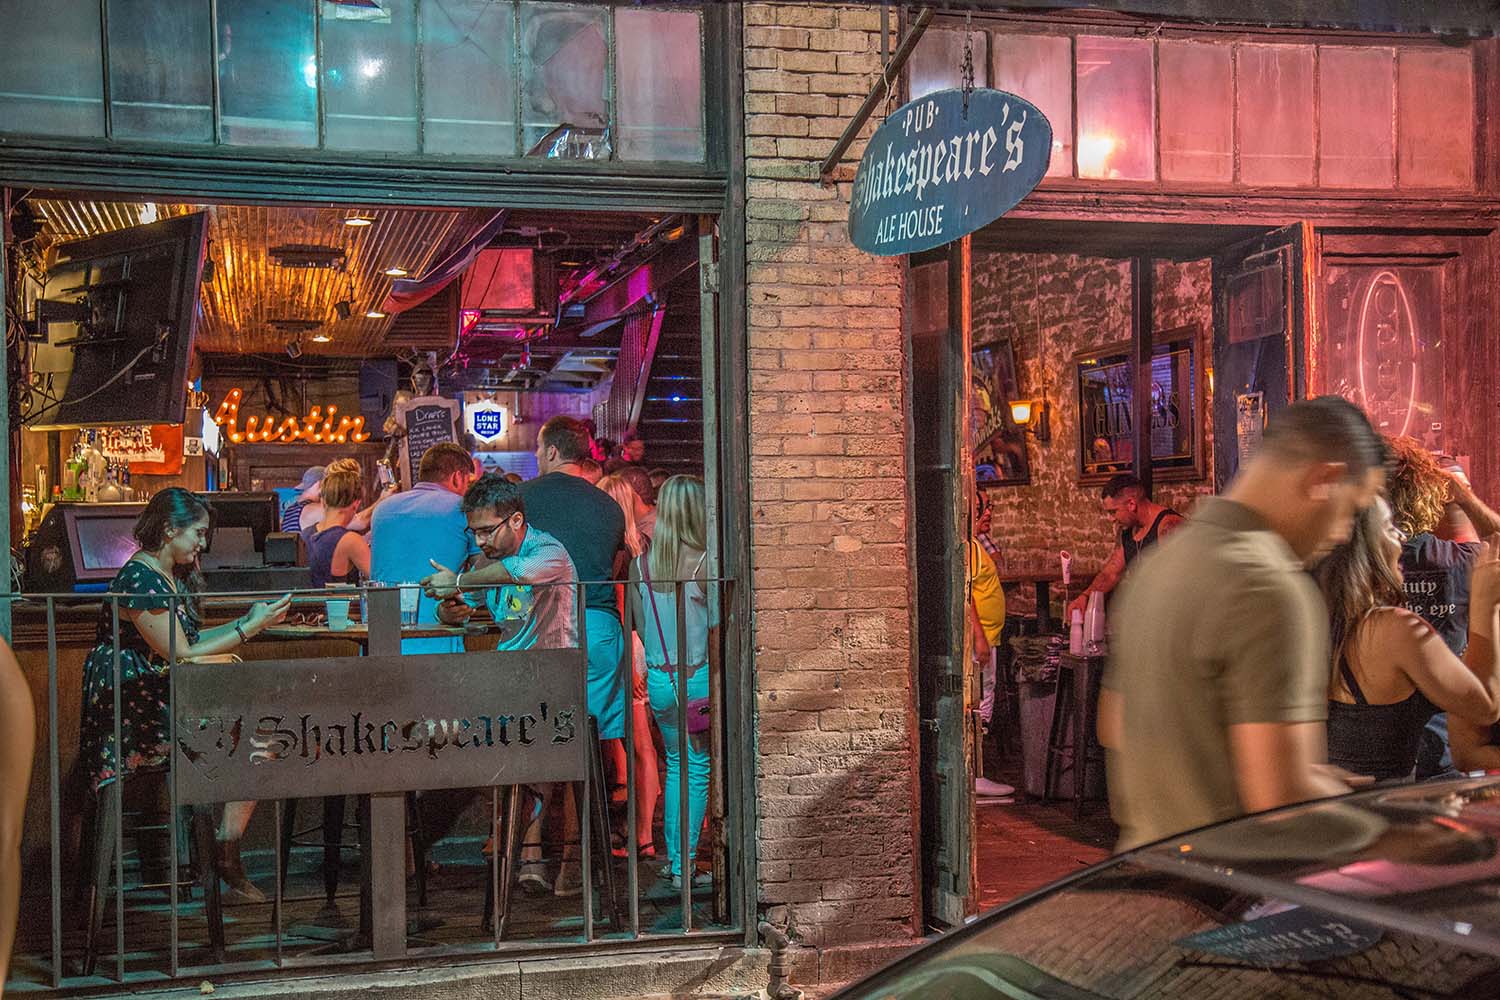 Shakespeare's Pub on 6th Street - One of Austin's favorite Irish Pubs